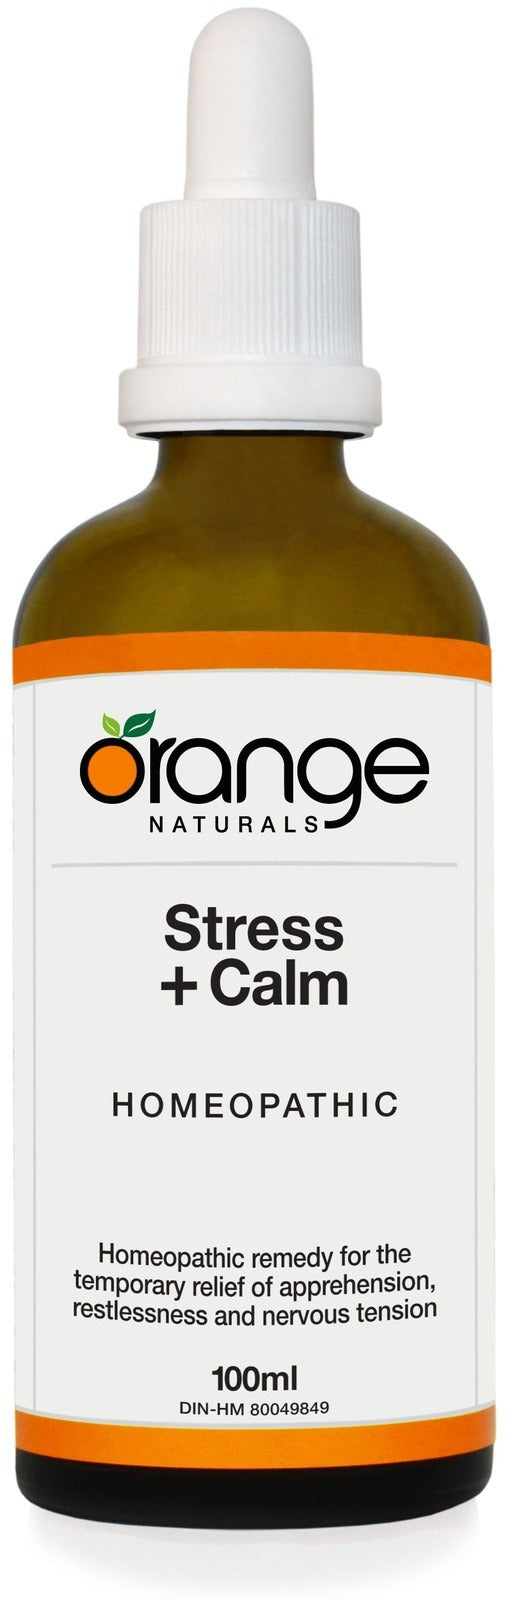 Orange Naturals Homeopathic Stress + Calm 100 mL Image 1